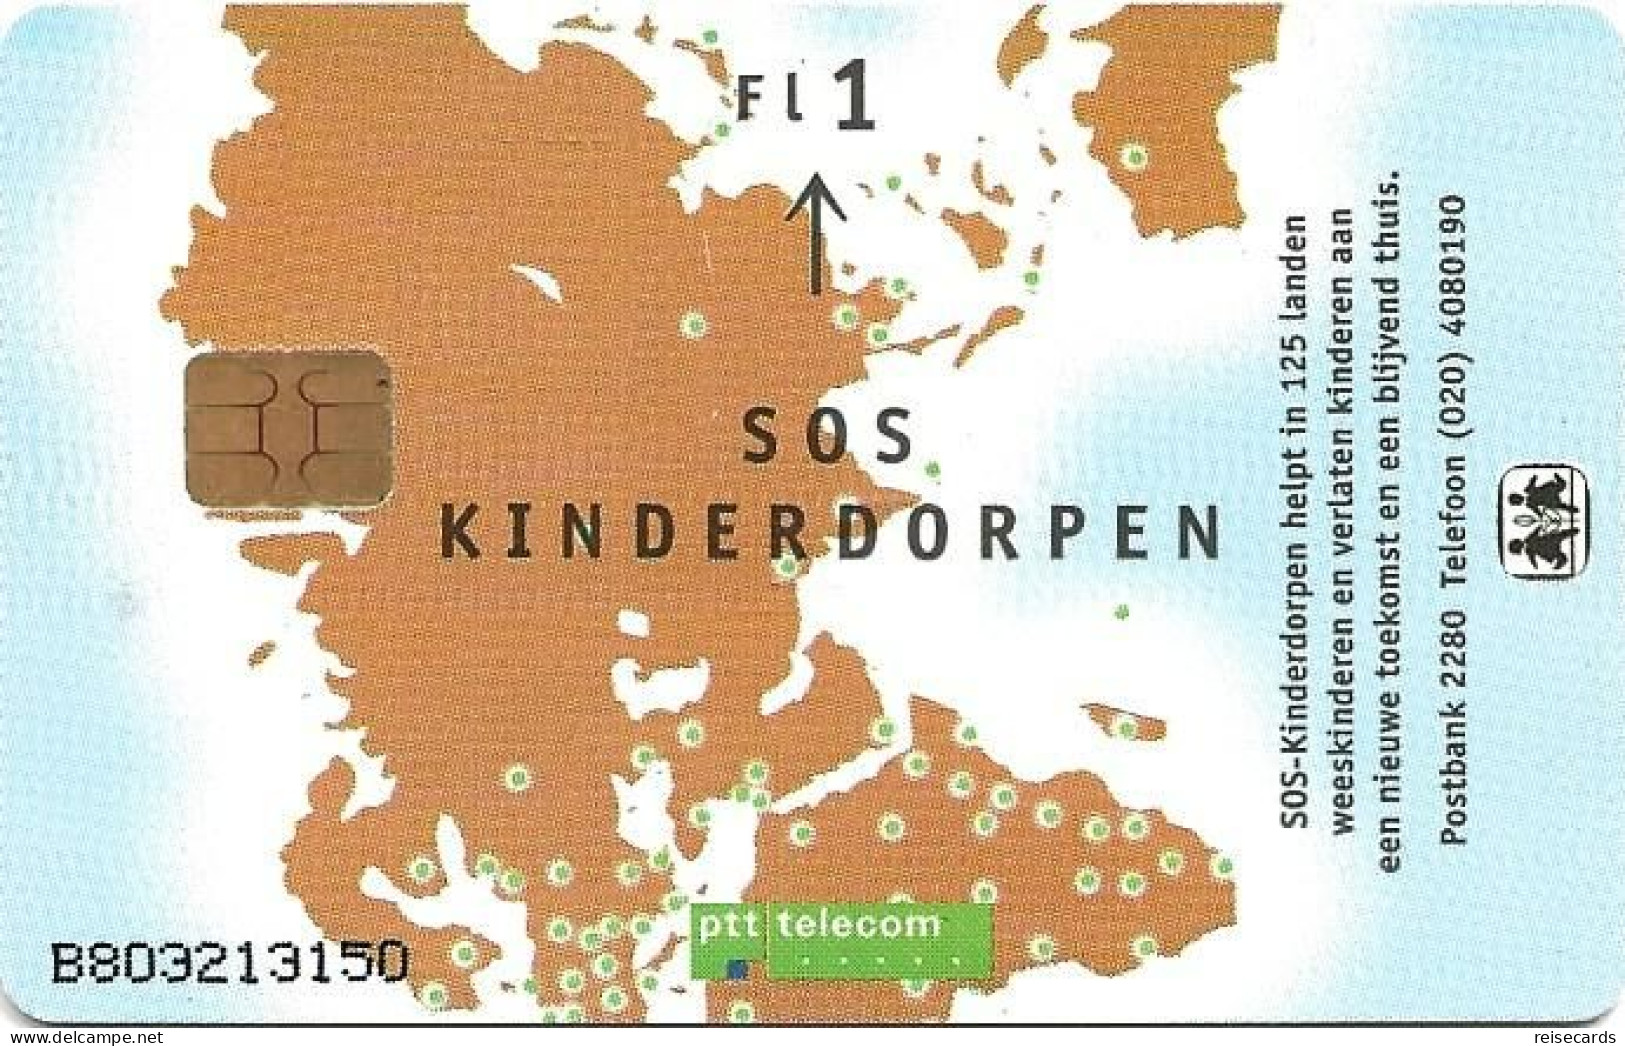 Netherlands: Ptt Telecom - 1995 SOS Kinderdorpen. Mint - öffentlich